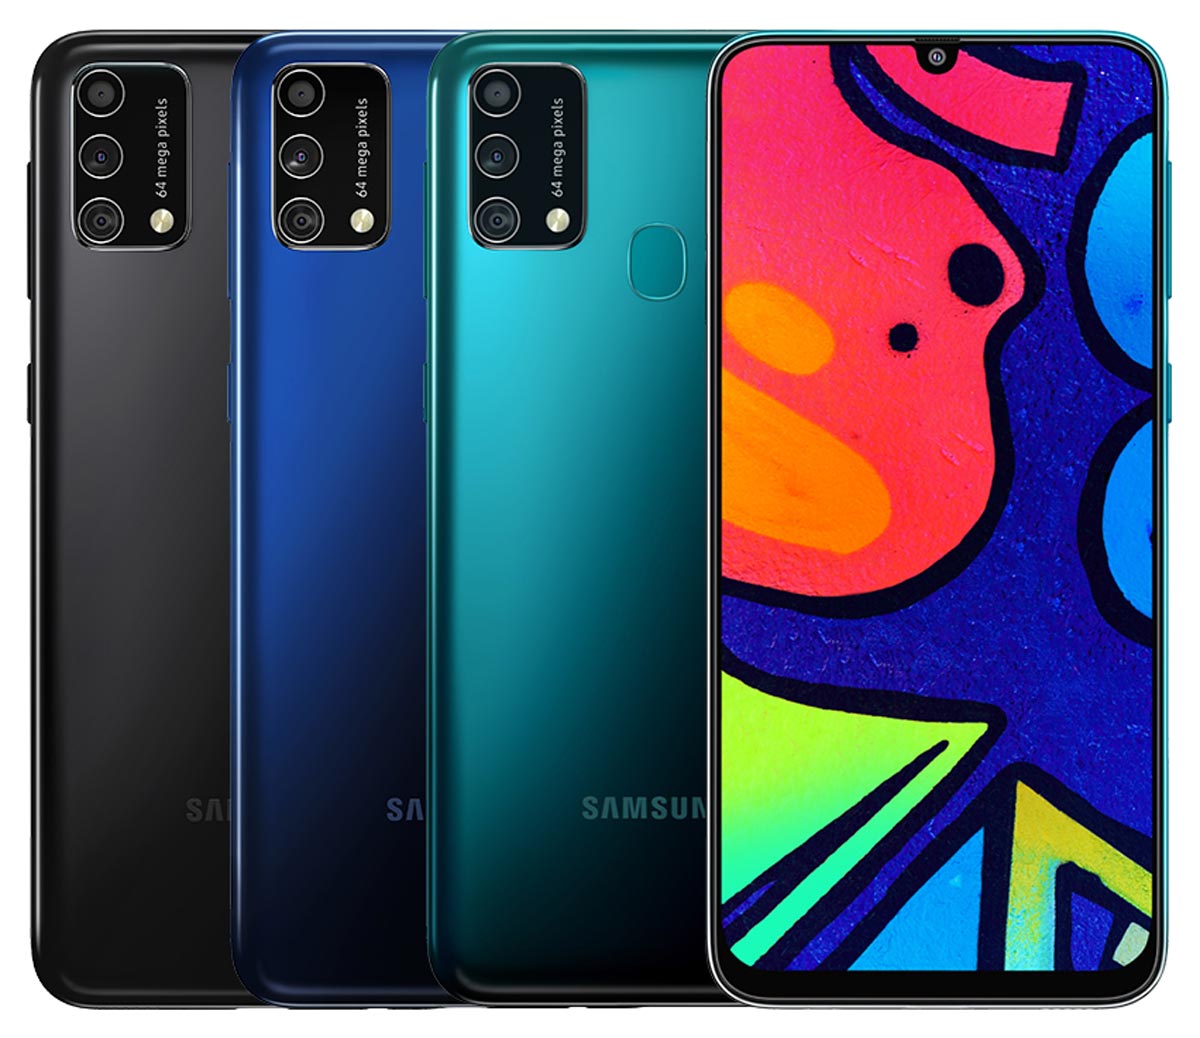 Samsung Galaxy F41 Colors